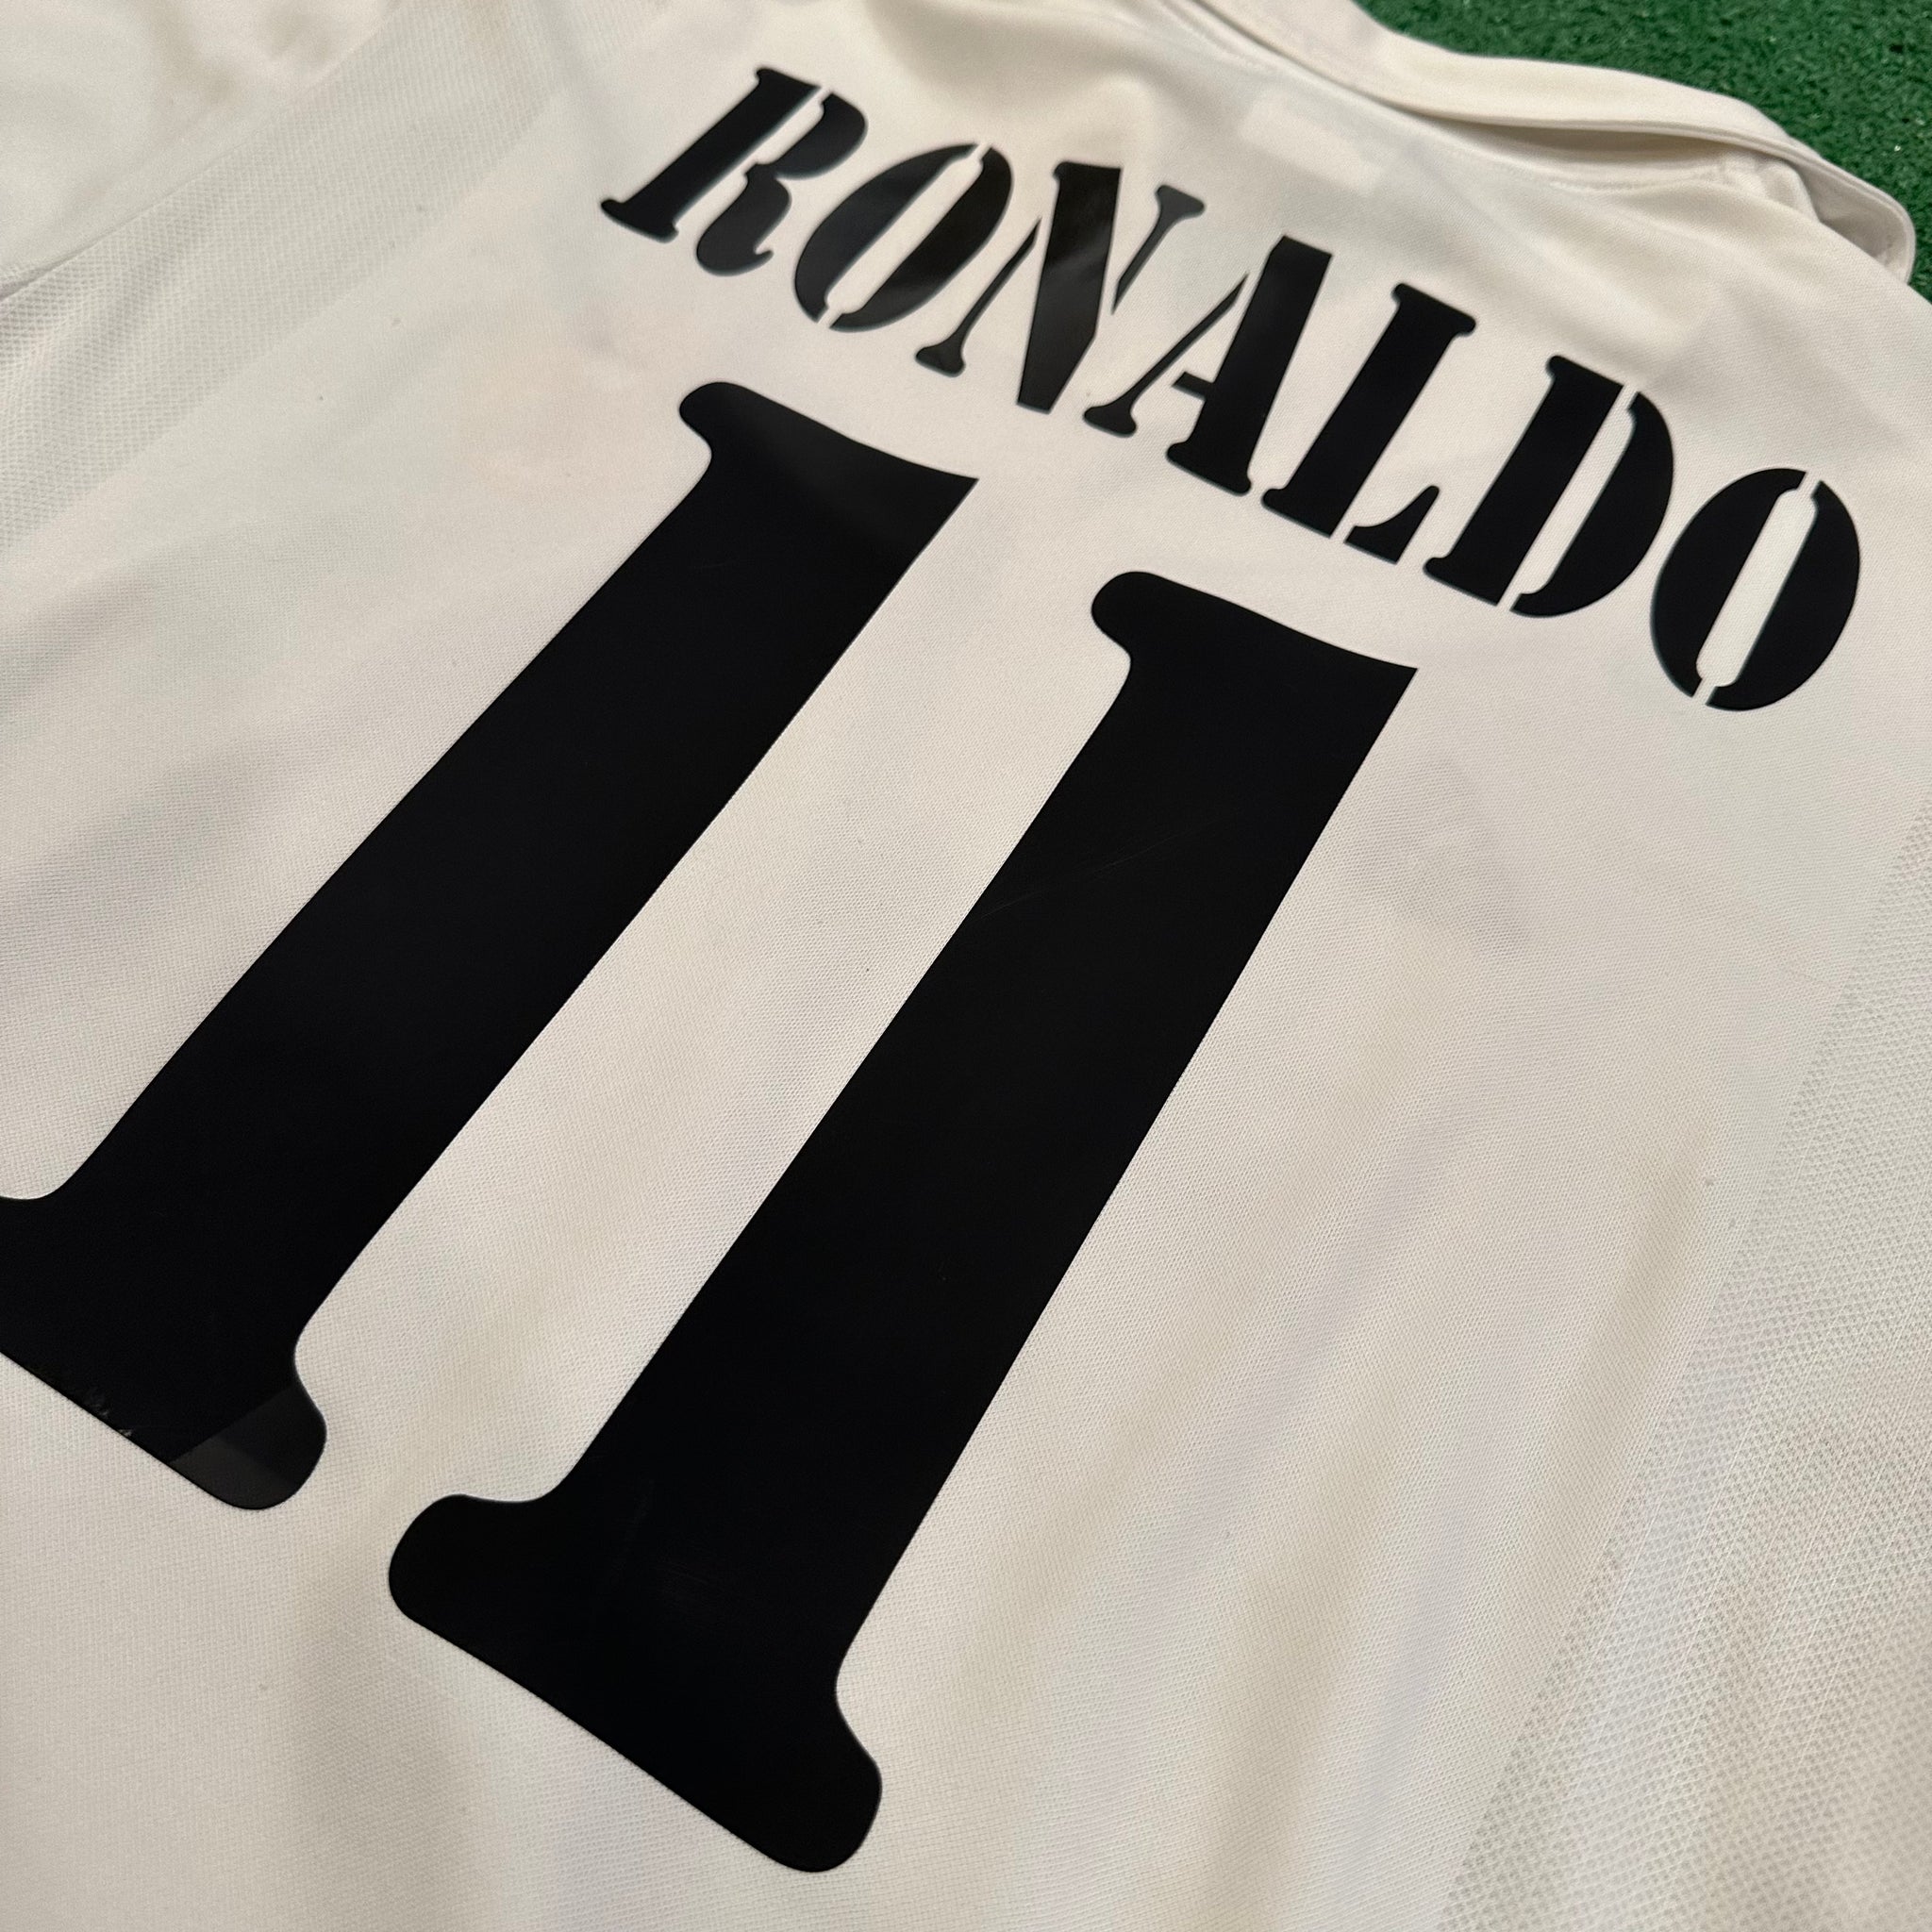 ronaldo 2002 jersey